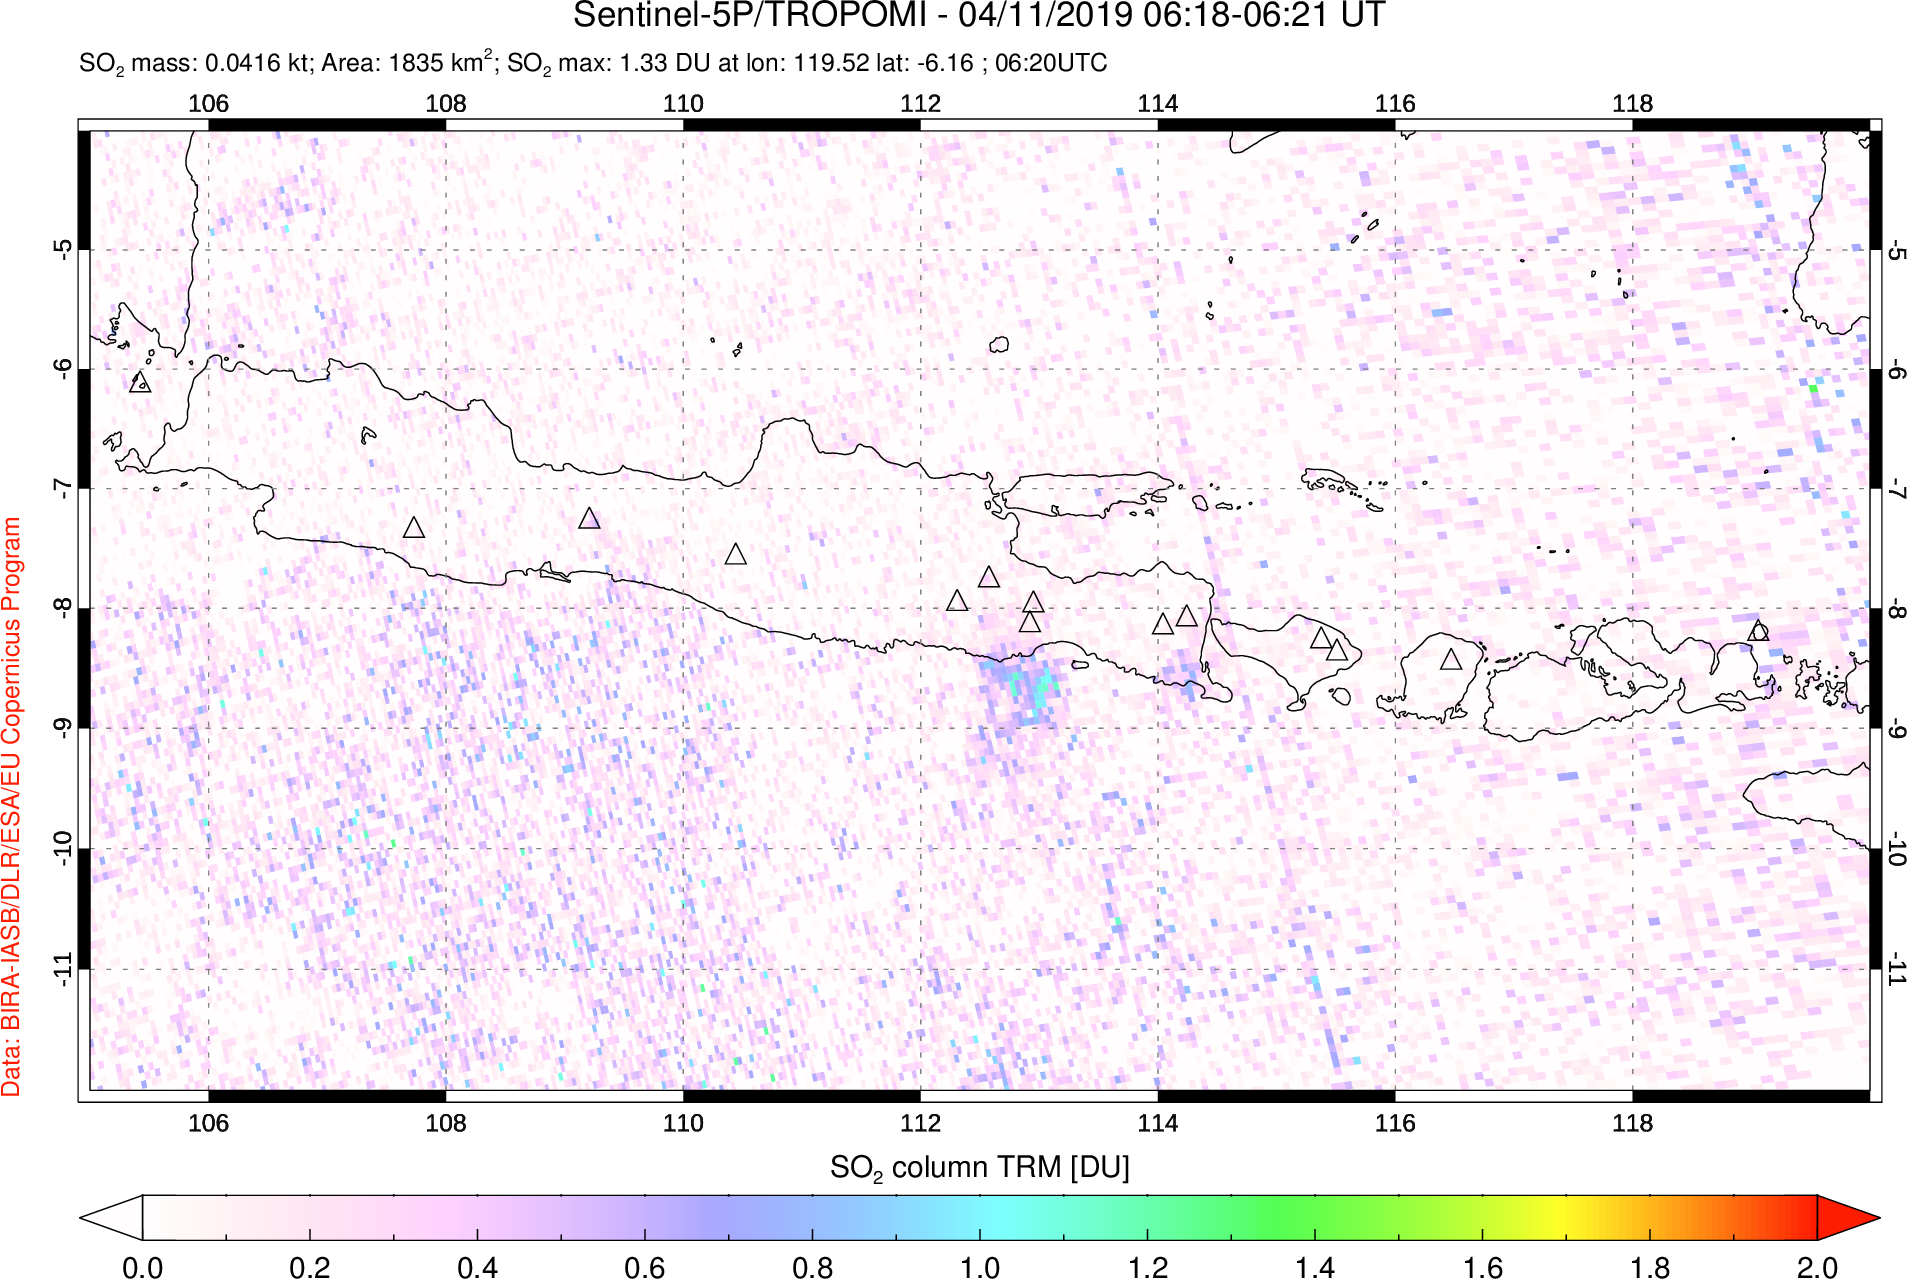 A sulfur dioxide image over Java, Indonesia on Apr 11, 2019.